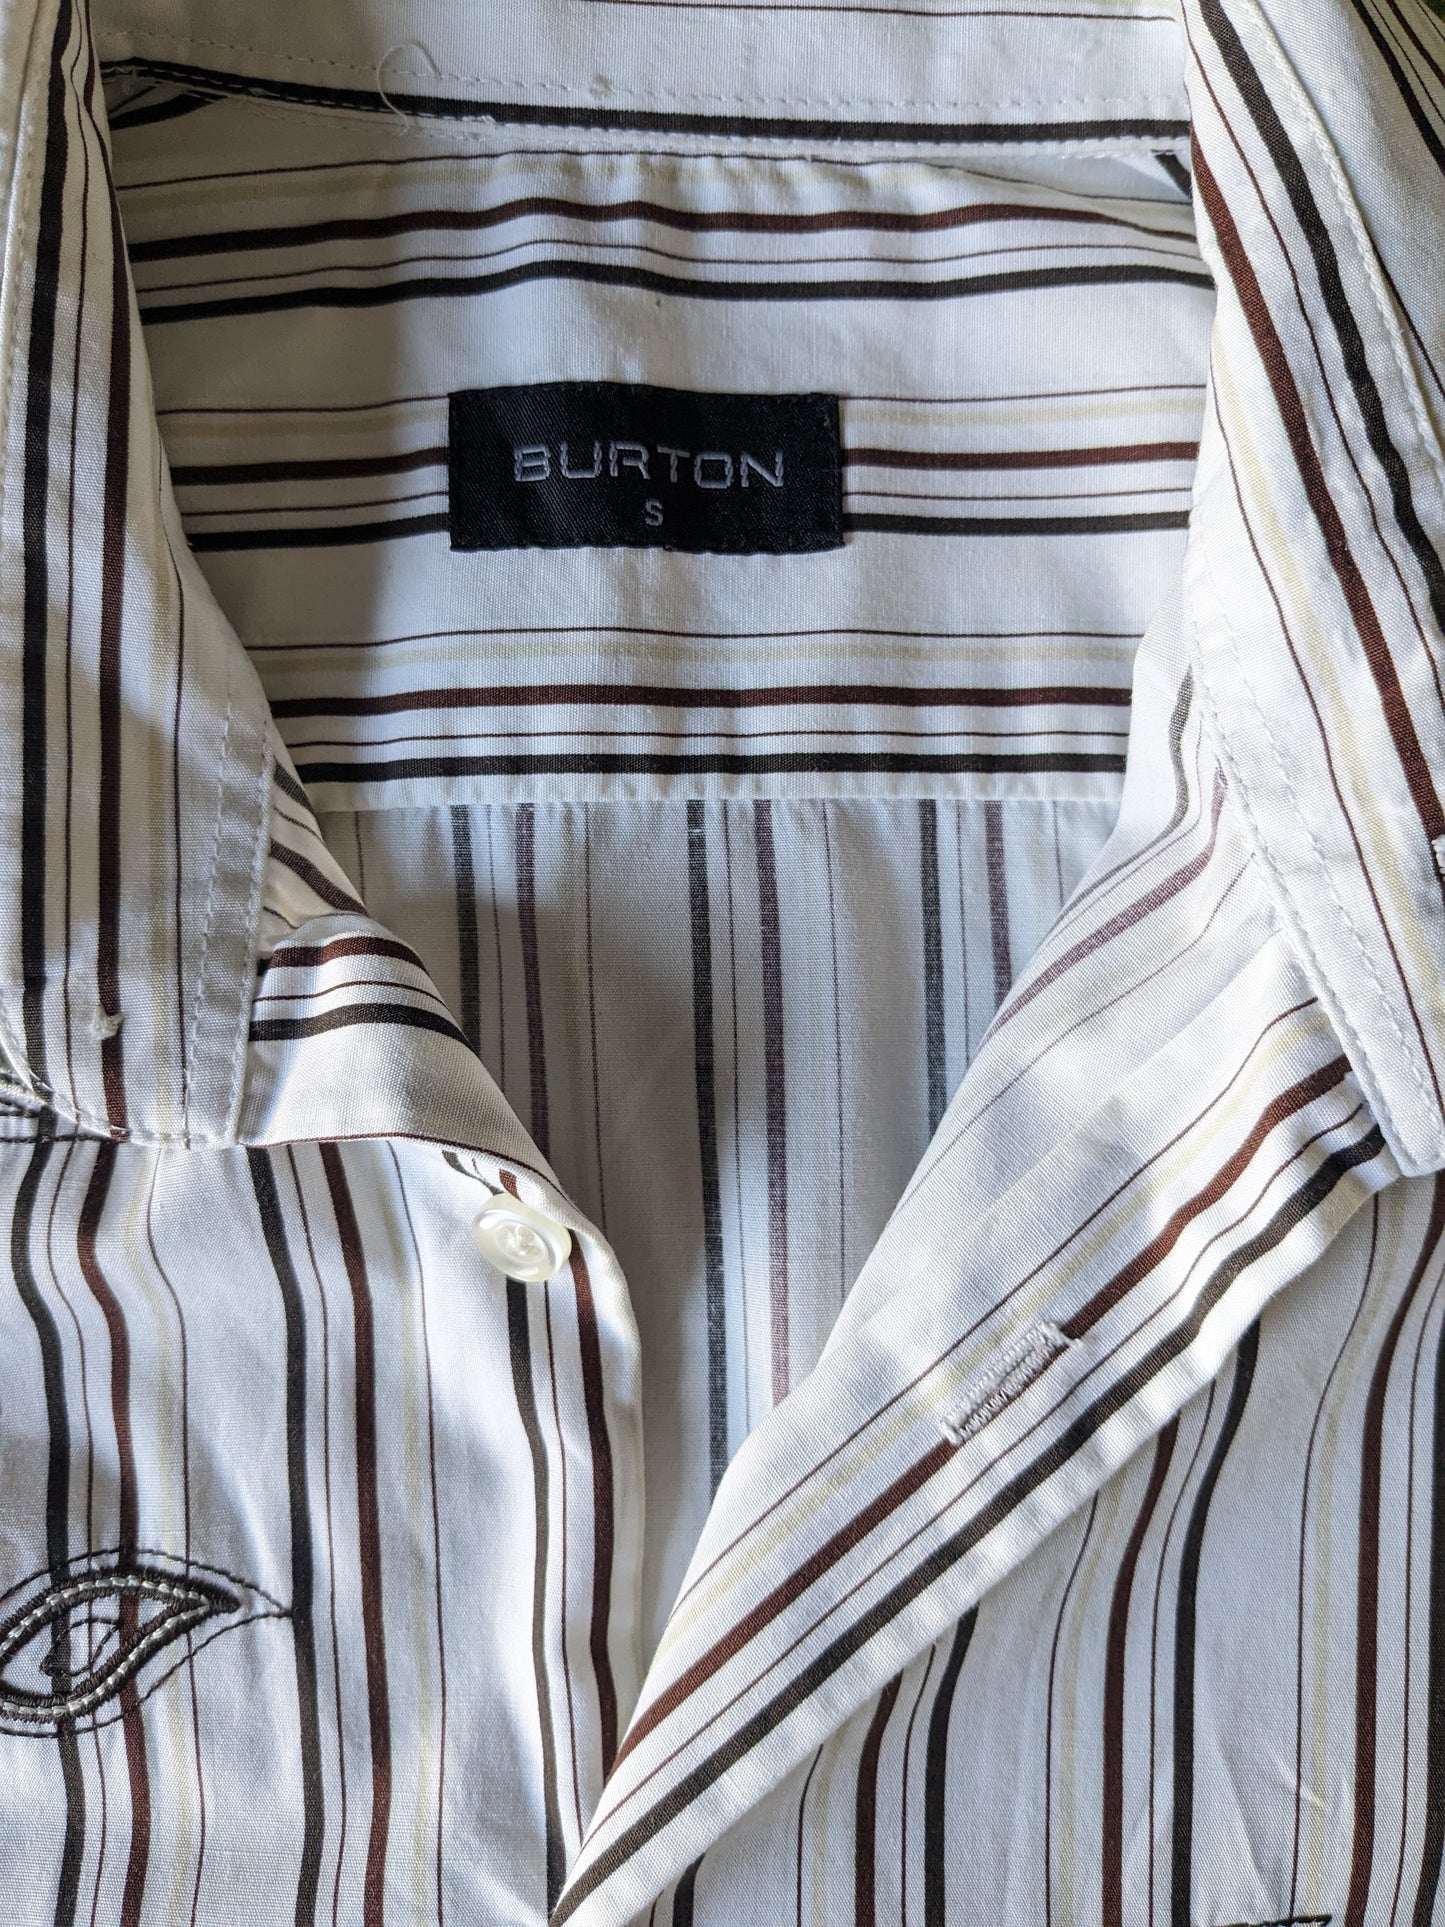 Burton Shirt Sleeve. Brun blanc noir blanc coloré. Taille S.